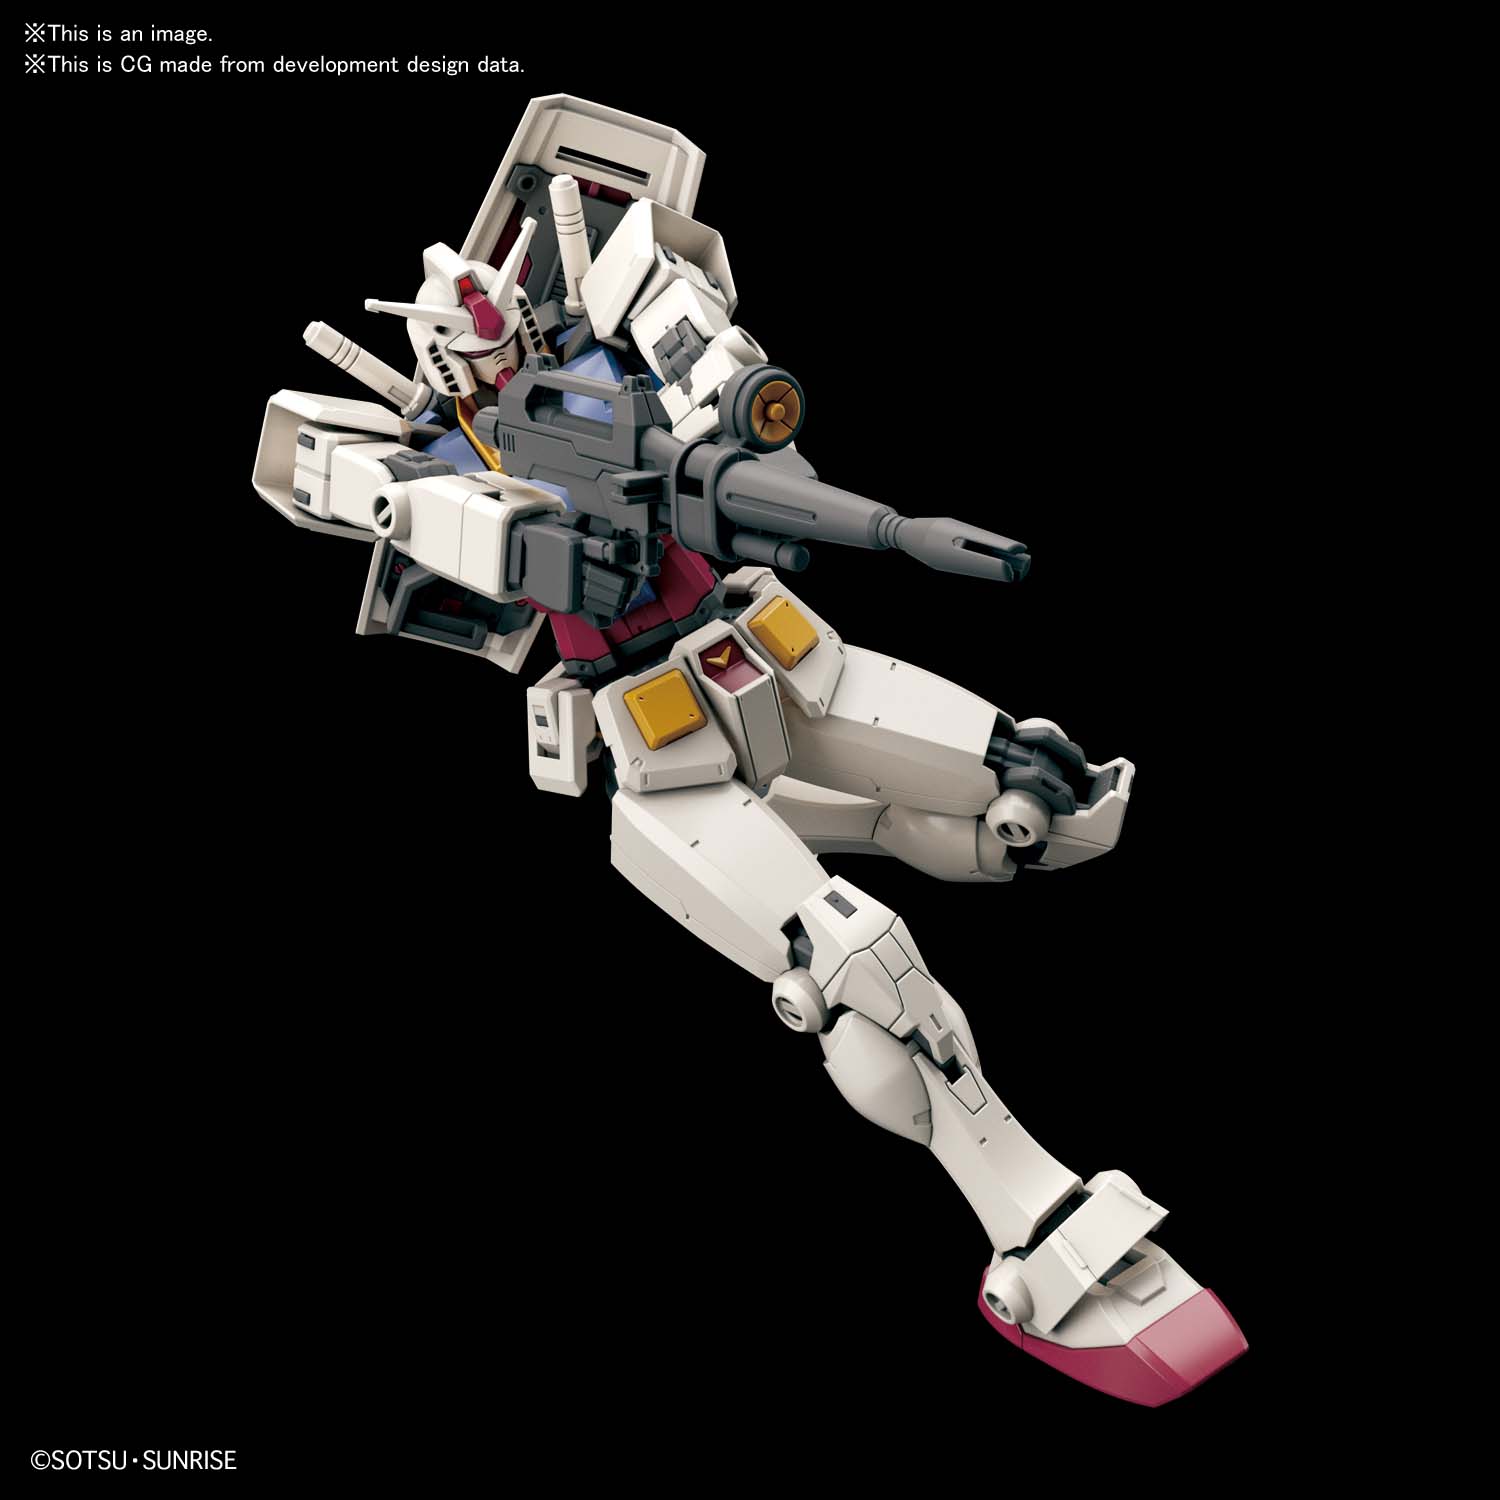 HG RX-78-2 Gundam Beyond Global 16 by Infinitevirtue on DeviantArt